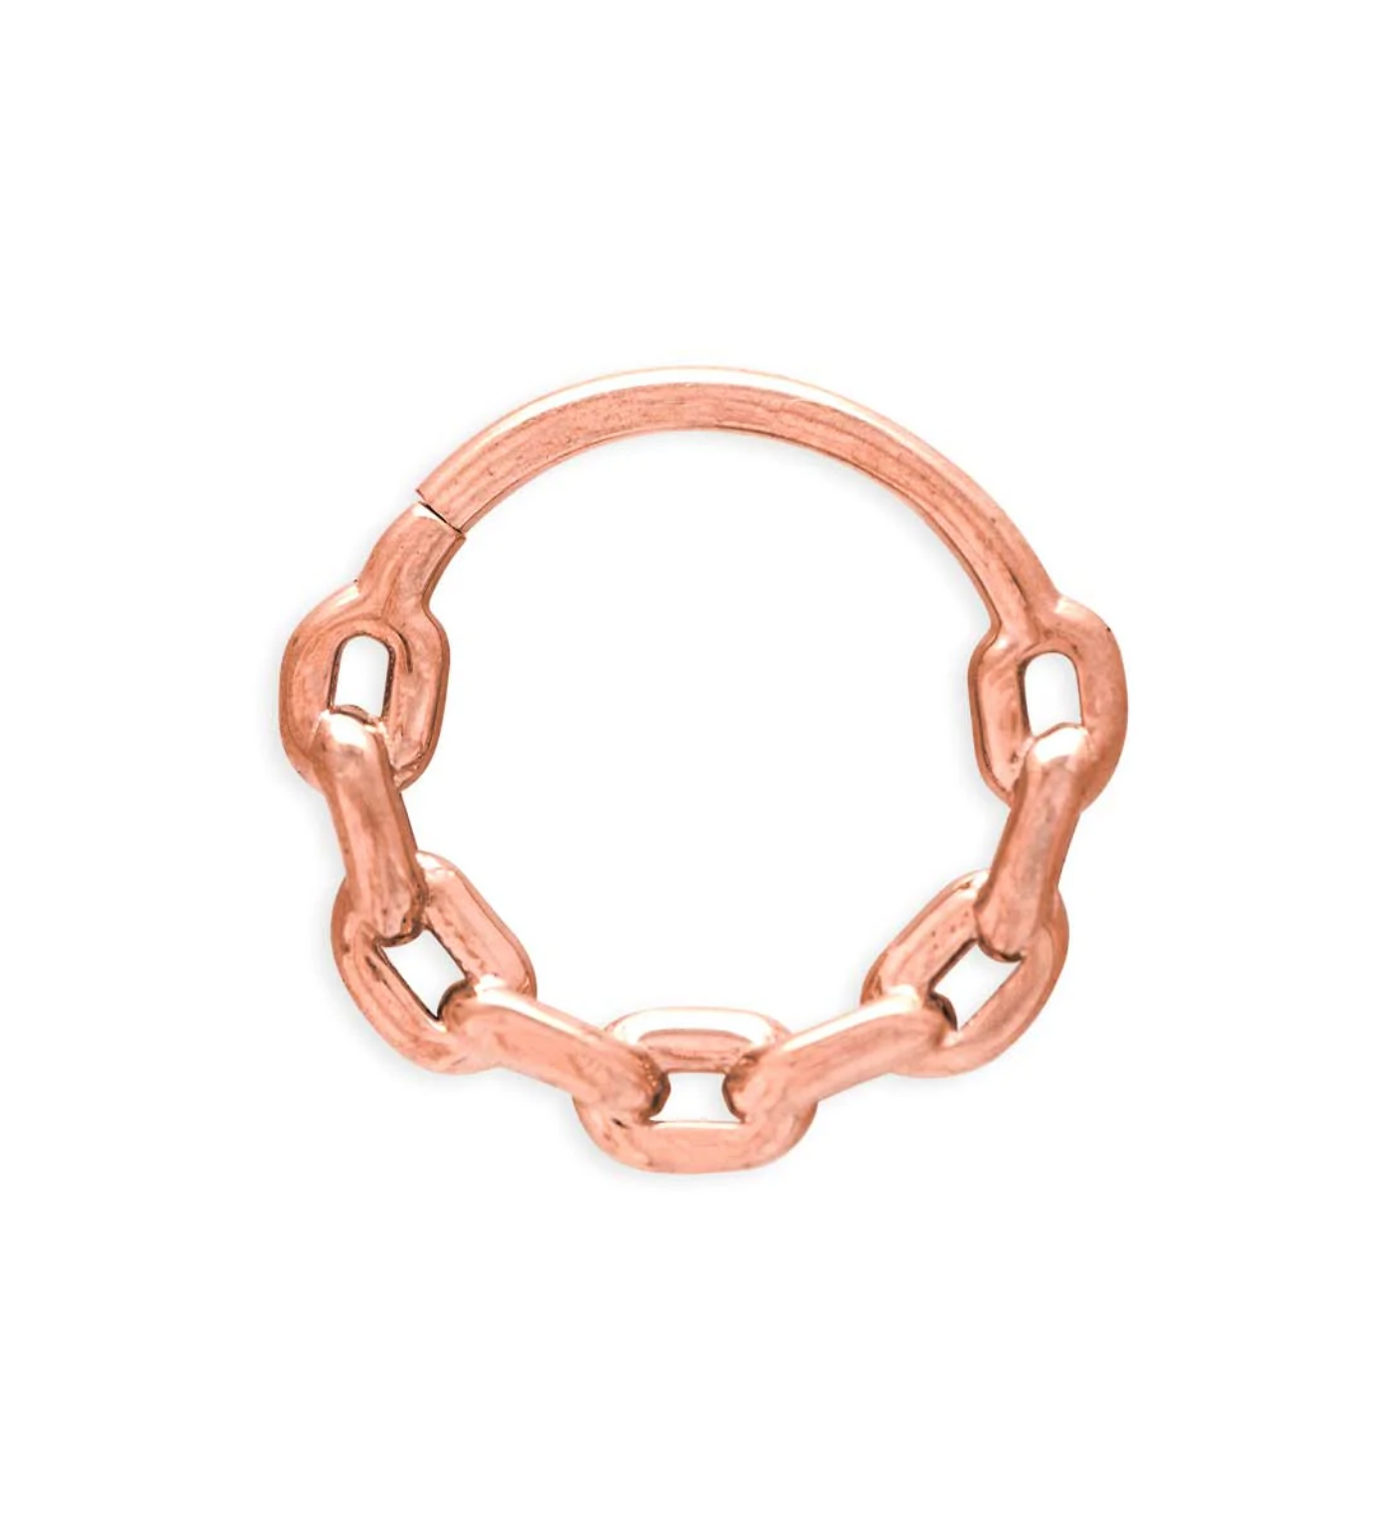 rose gold hoop for body piercings chain